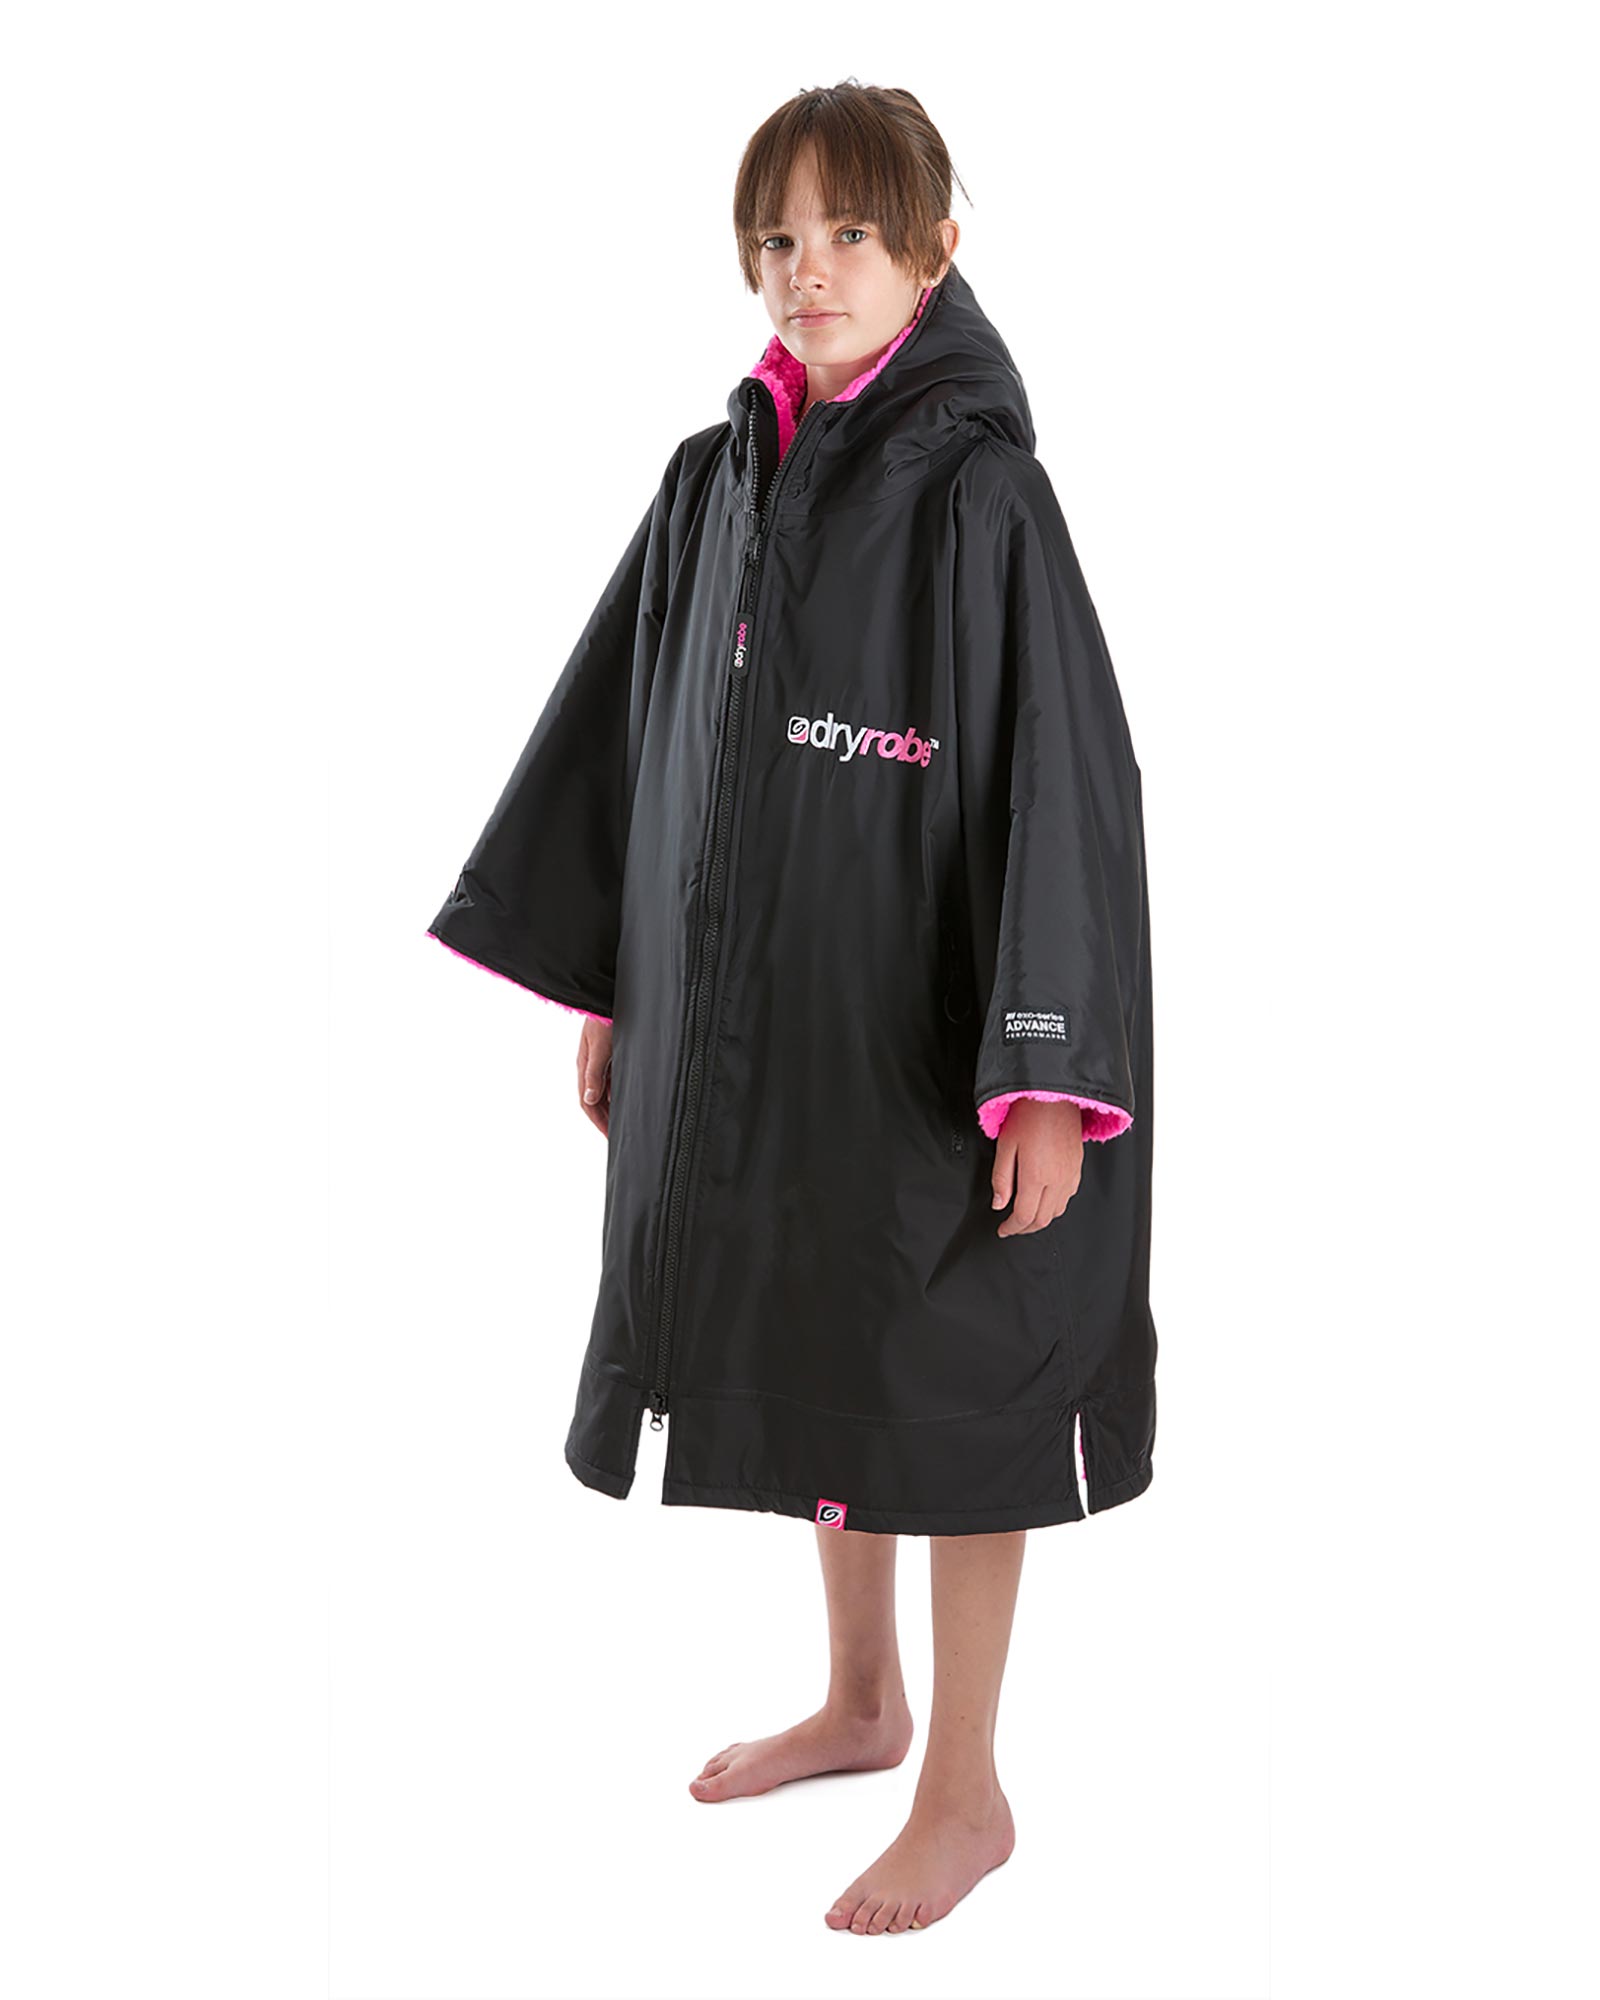 Dryrobe Advance Kids’ Short Sleeve - Black/Pink S